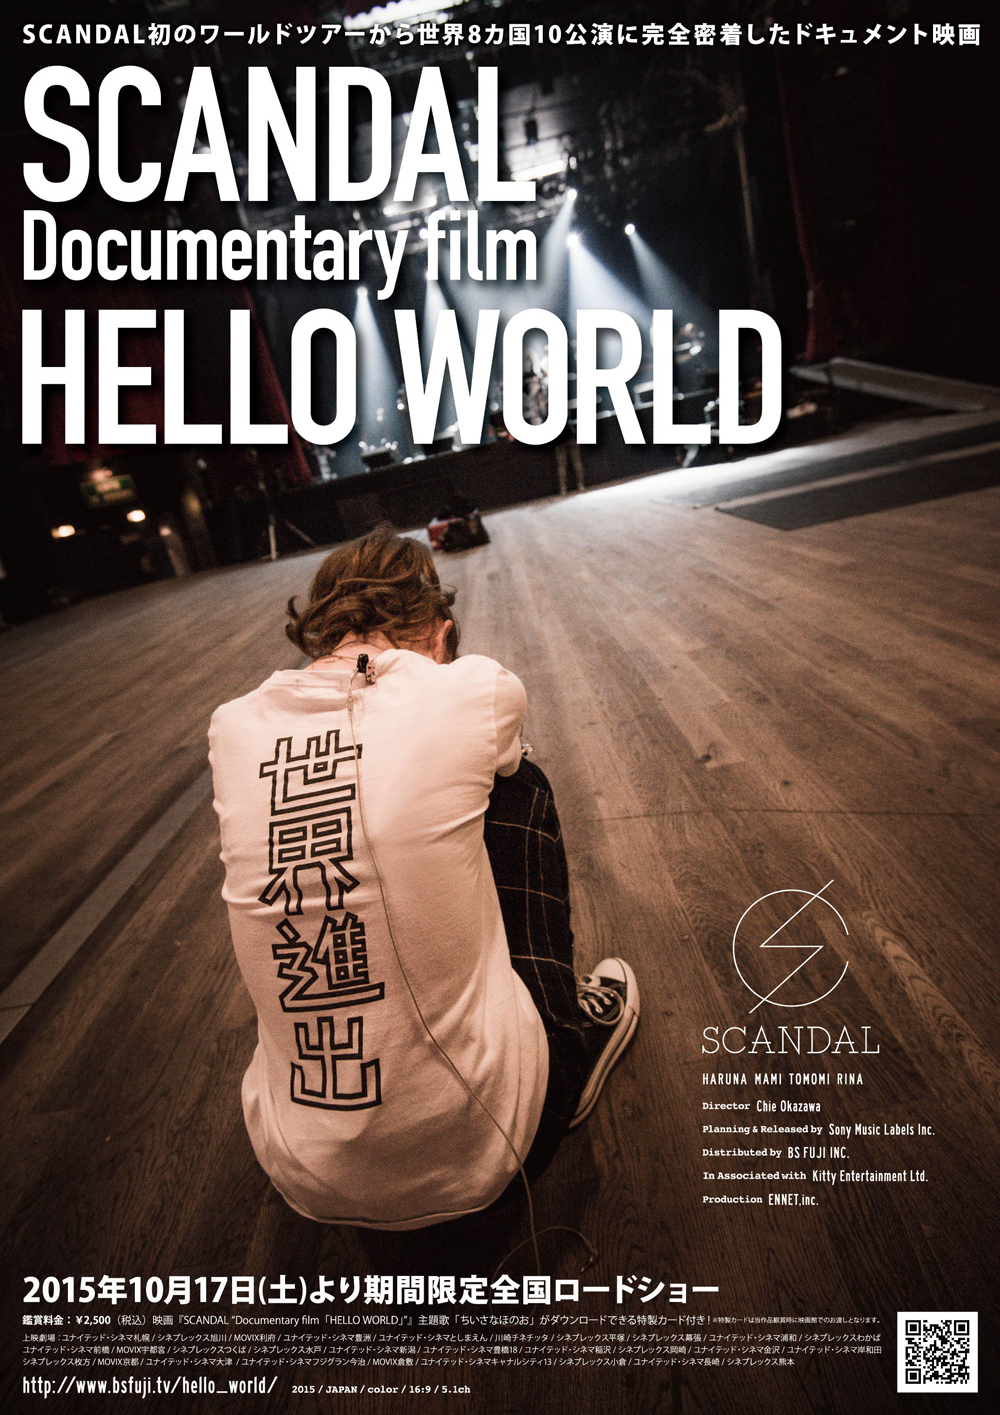 SCANDAL “Documentary film「HELLO WORLD」” Scandal-movie